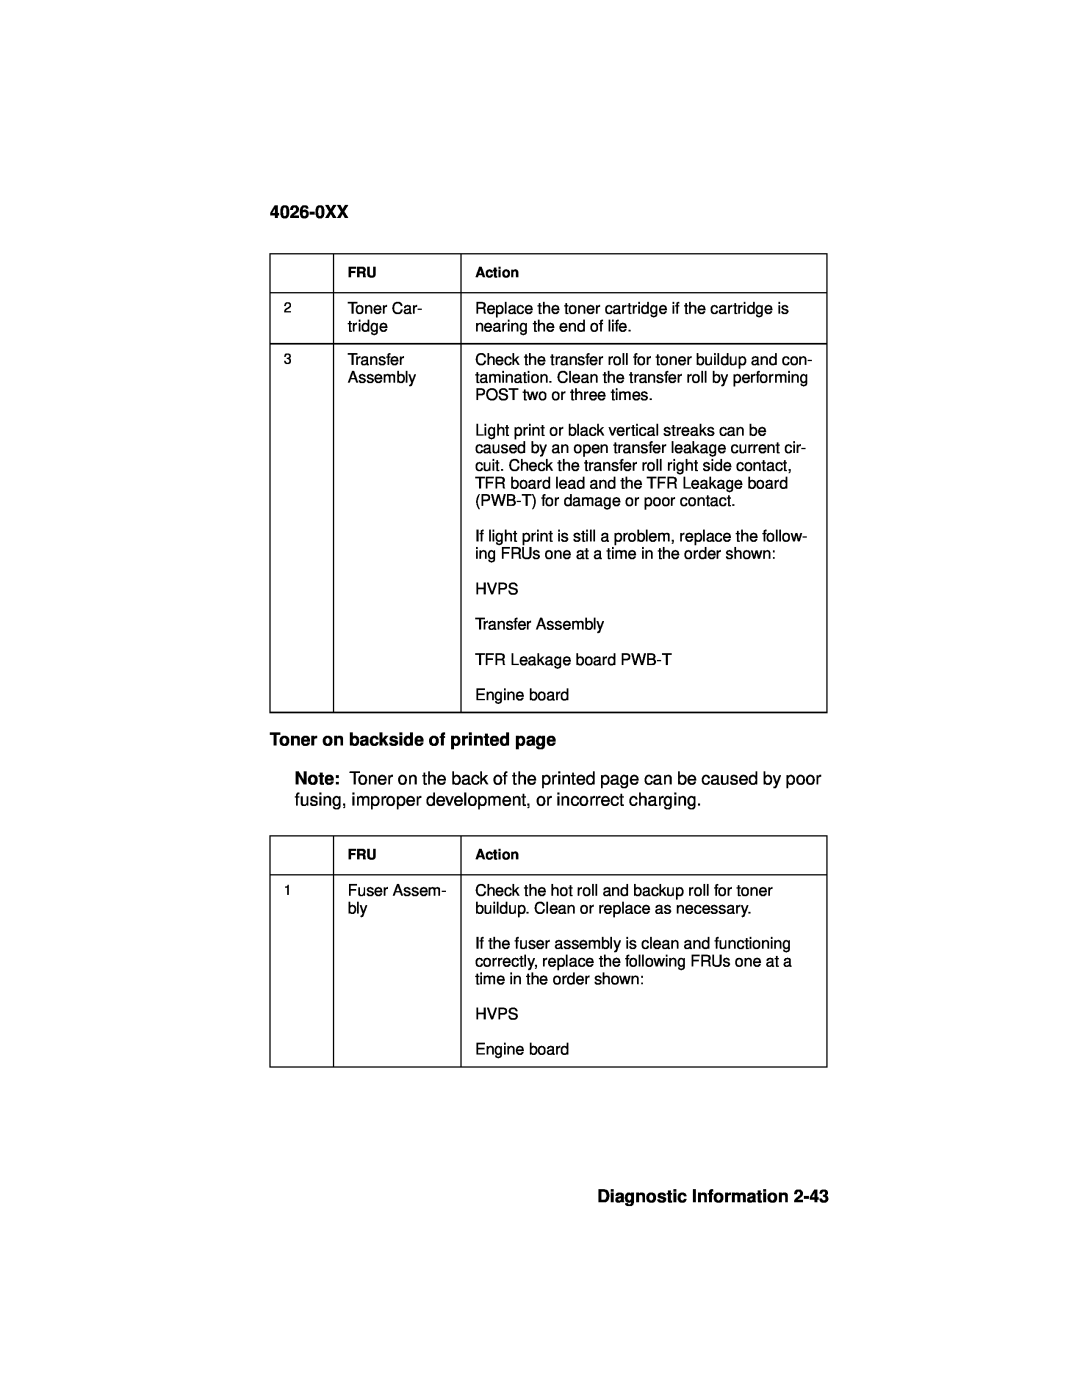 Lexmark OptraTM manual Toner on backside of printed page, 4026-0XX, Diagnostic Information 